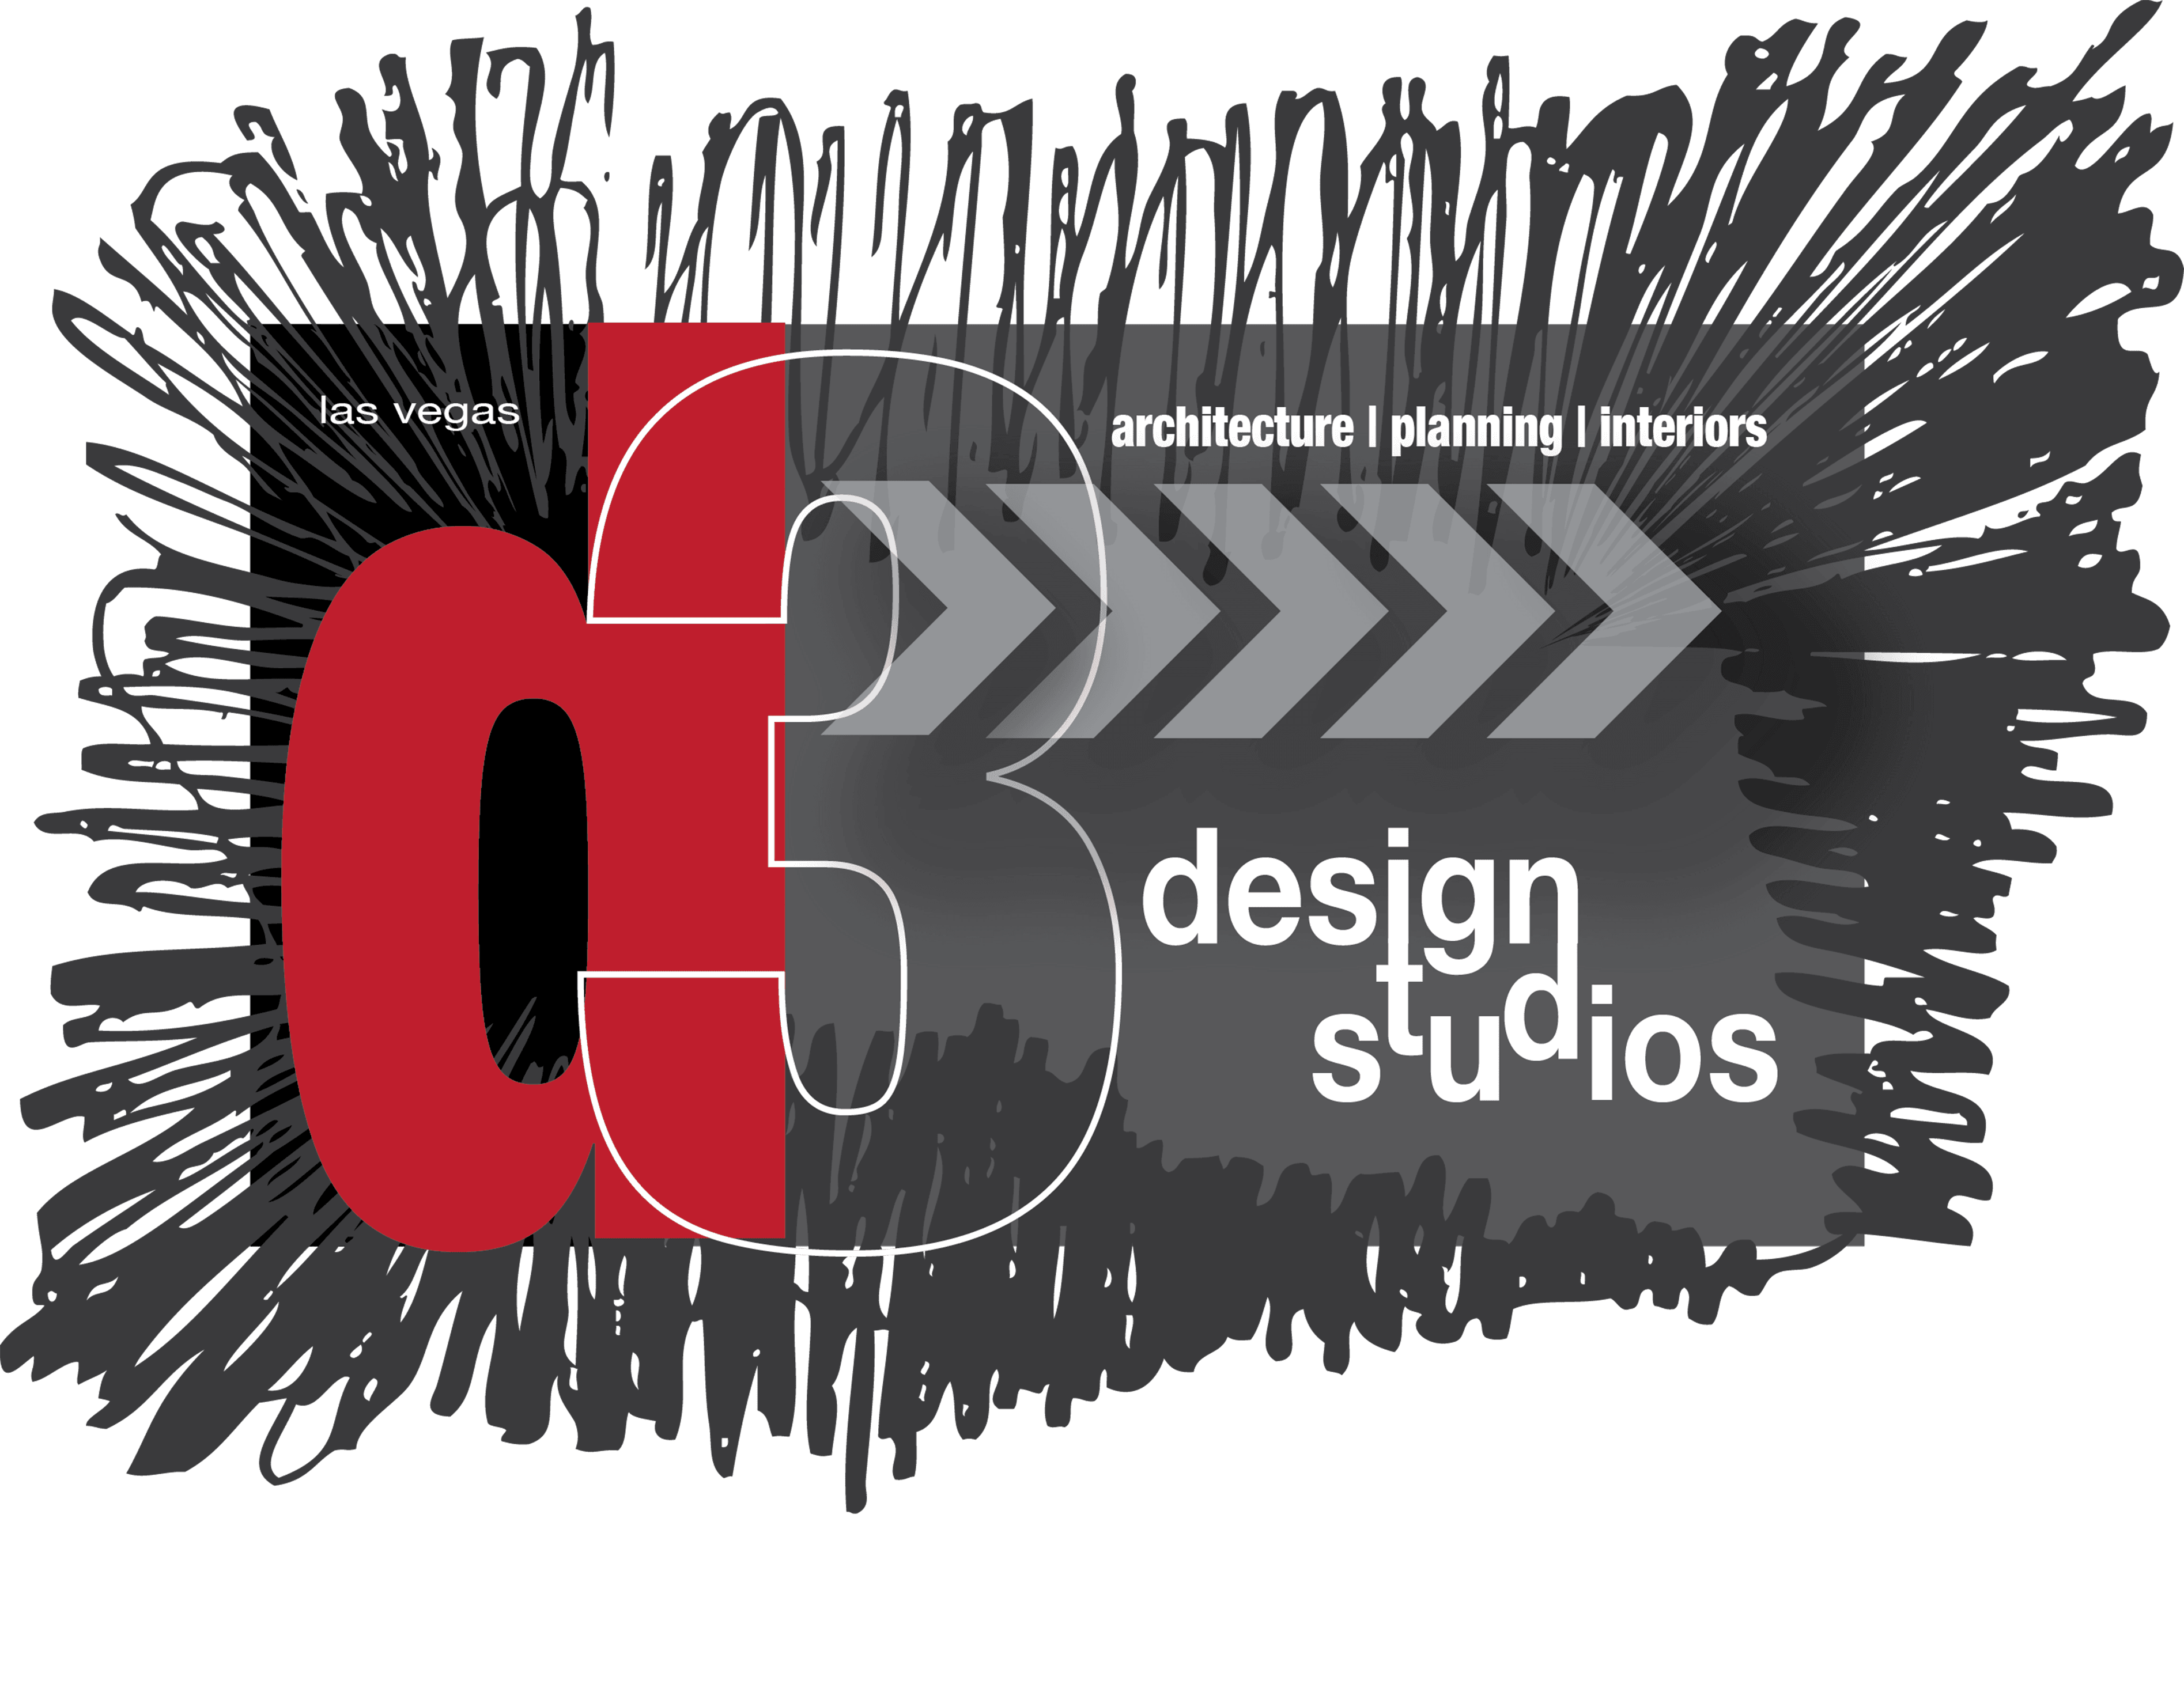 las vegas clipart design